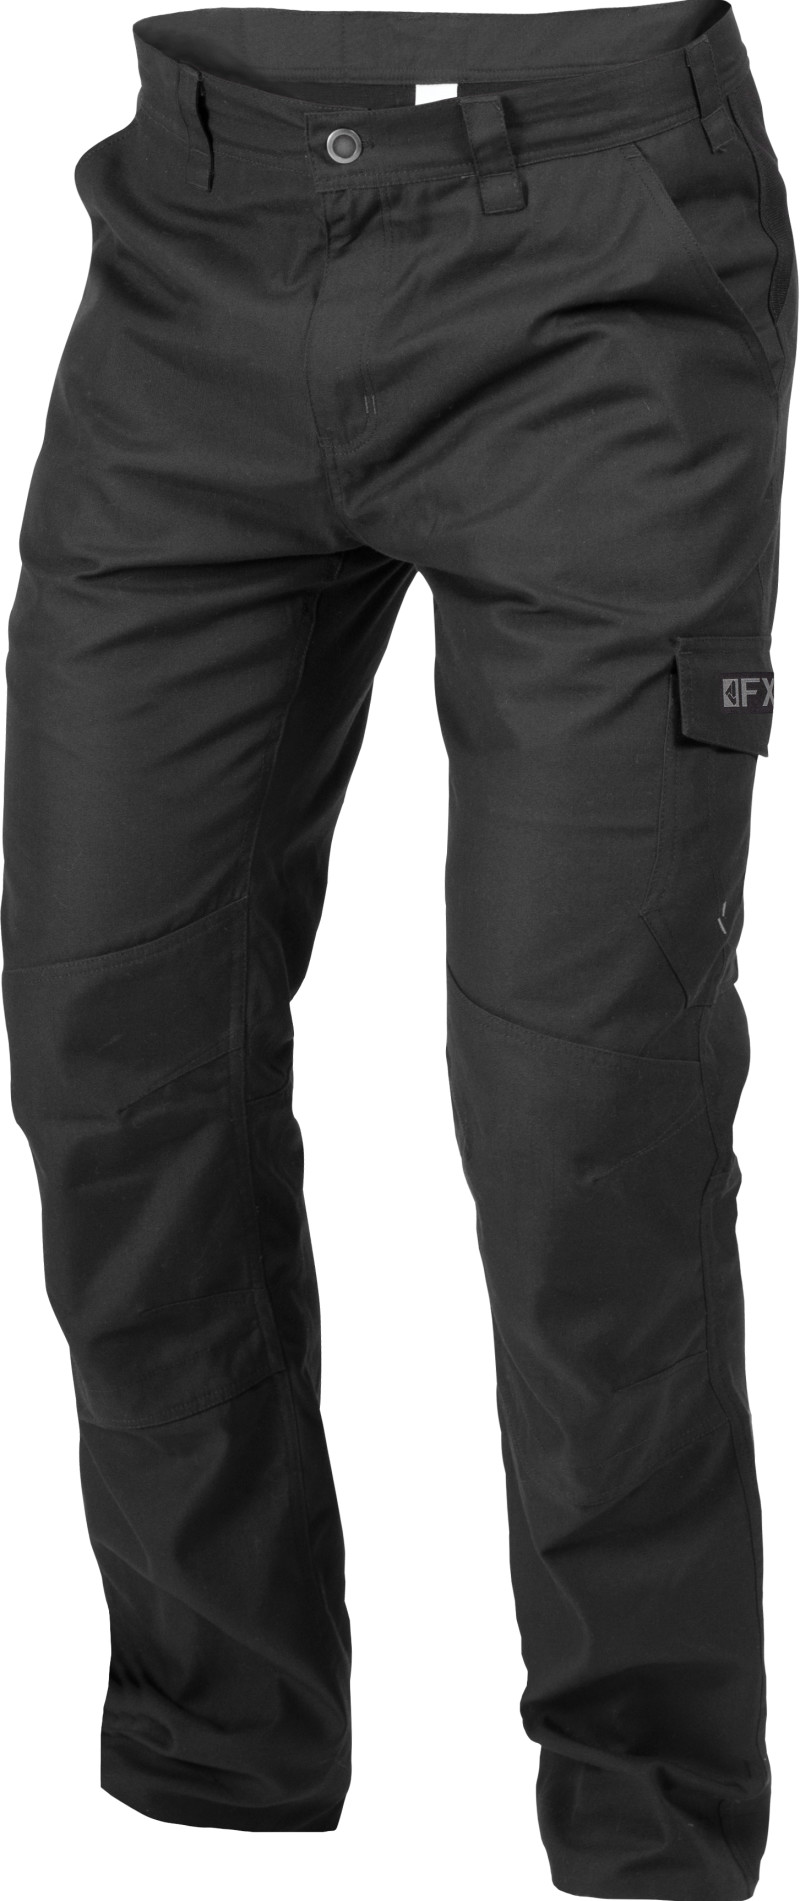 fxr racing pants  workwear cargo pants - casual